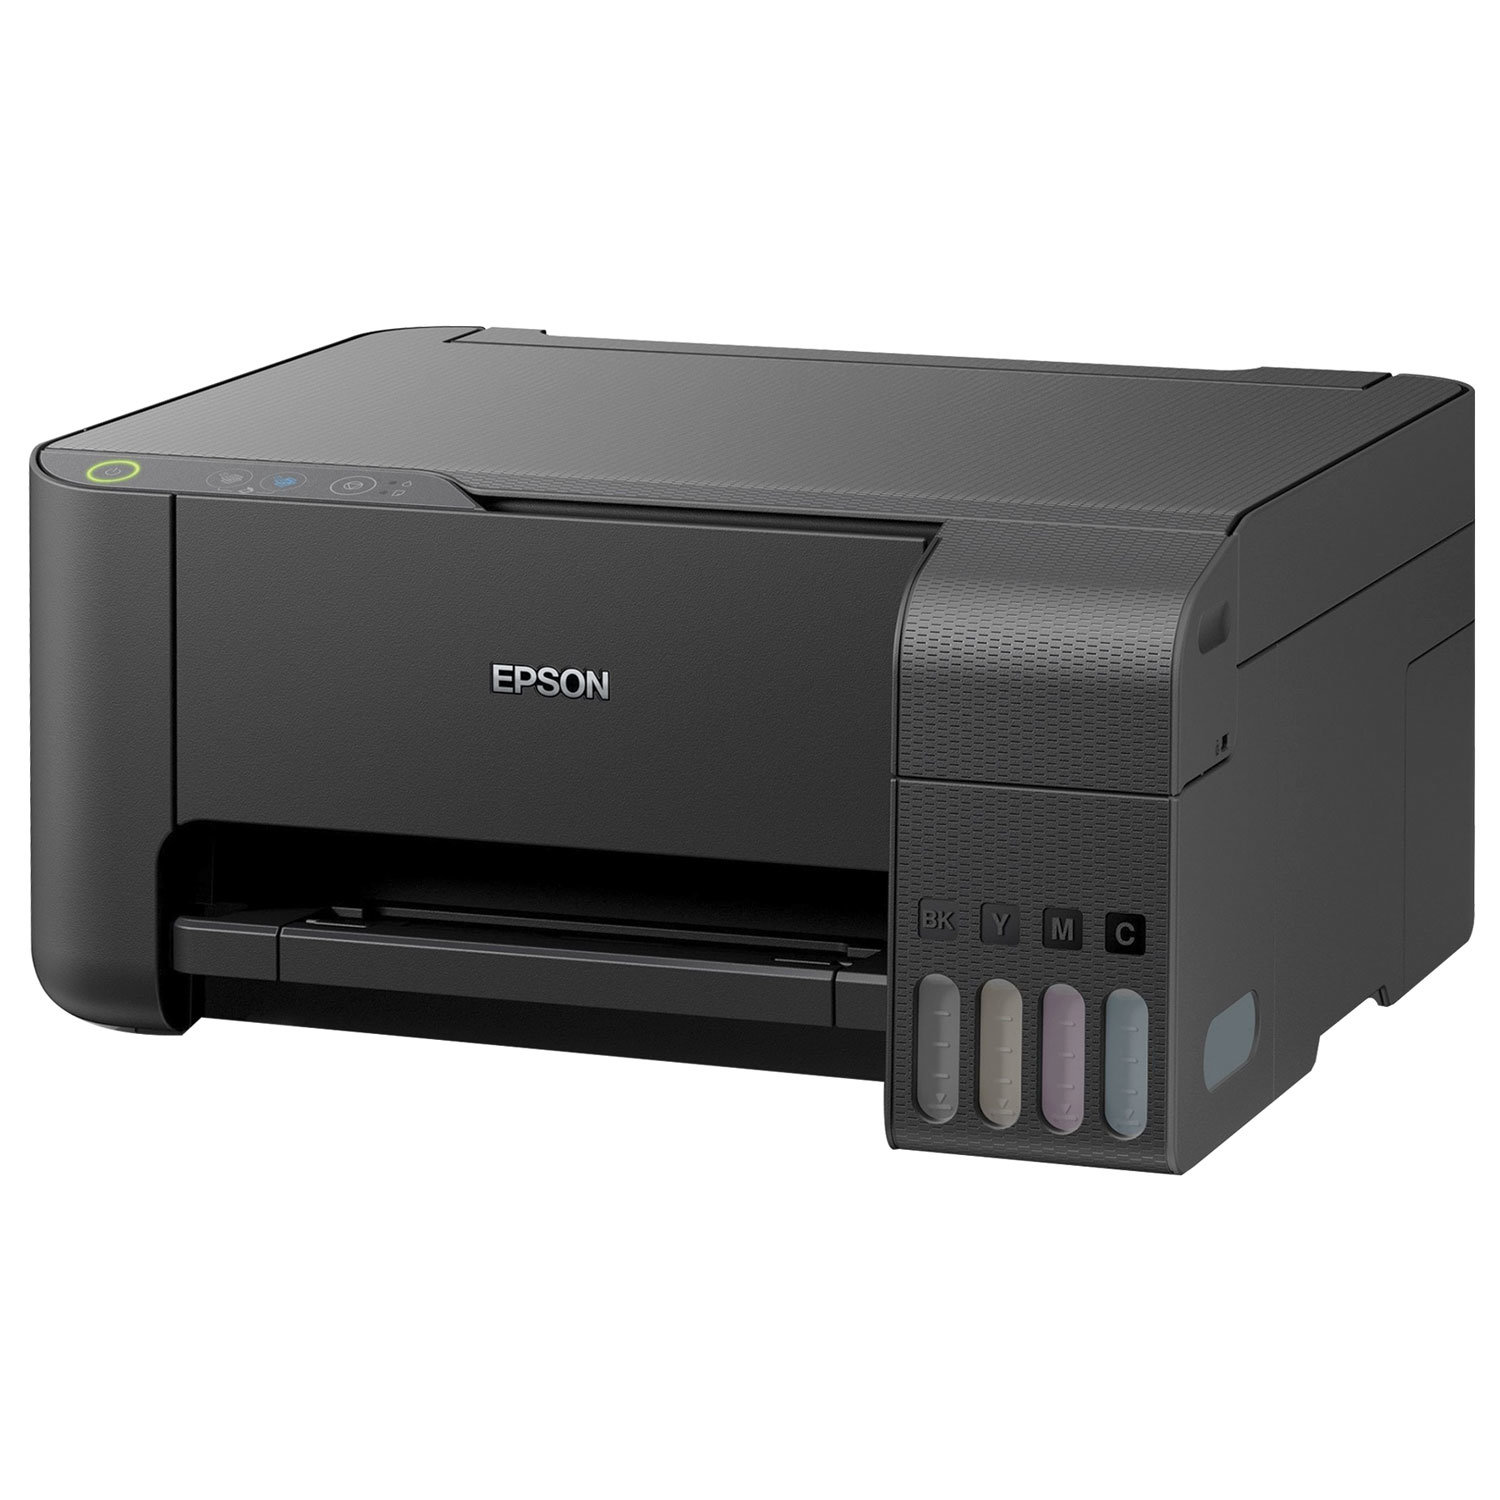 Epson l3150 купить. Epson l3100. Принтер Epson l3100. Принтер Epson l3100 (МФУ). Принтер Epson l3101 МФУ.